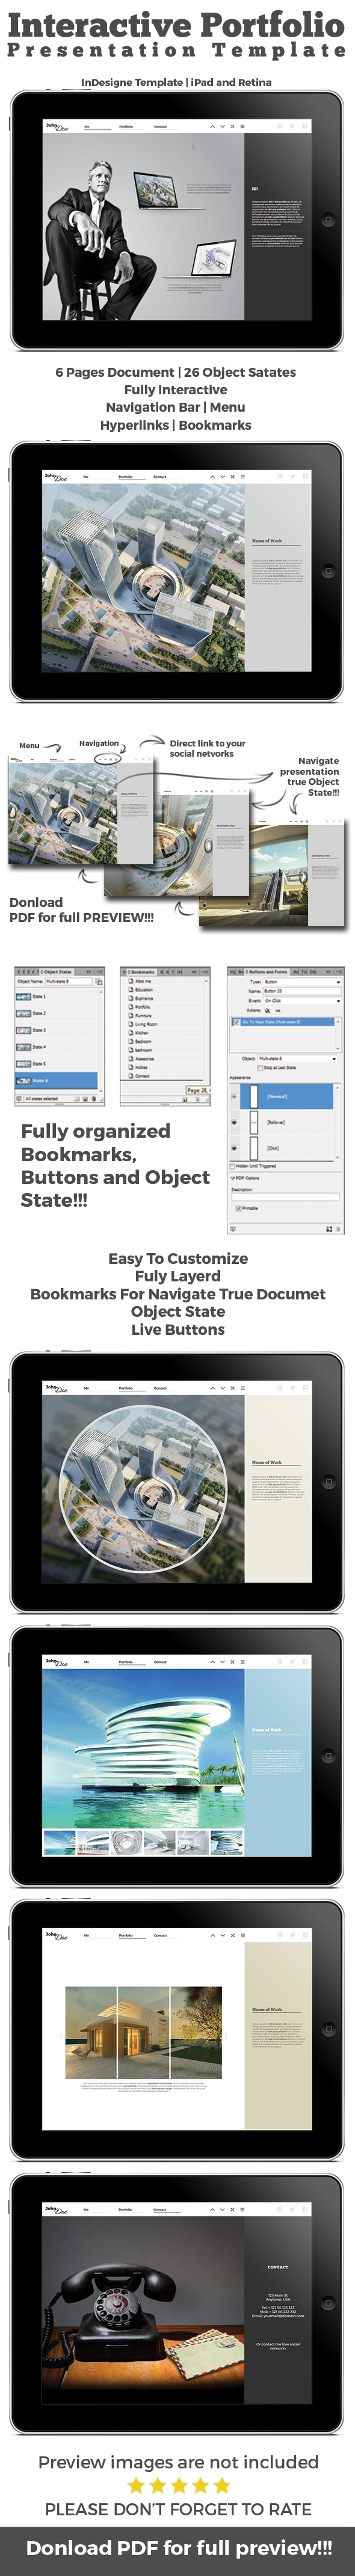 interactive pdf presentation template InDesign iPad retina